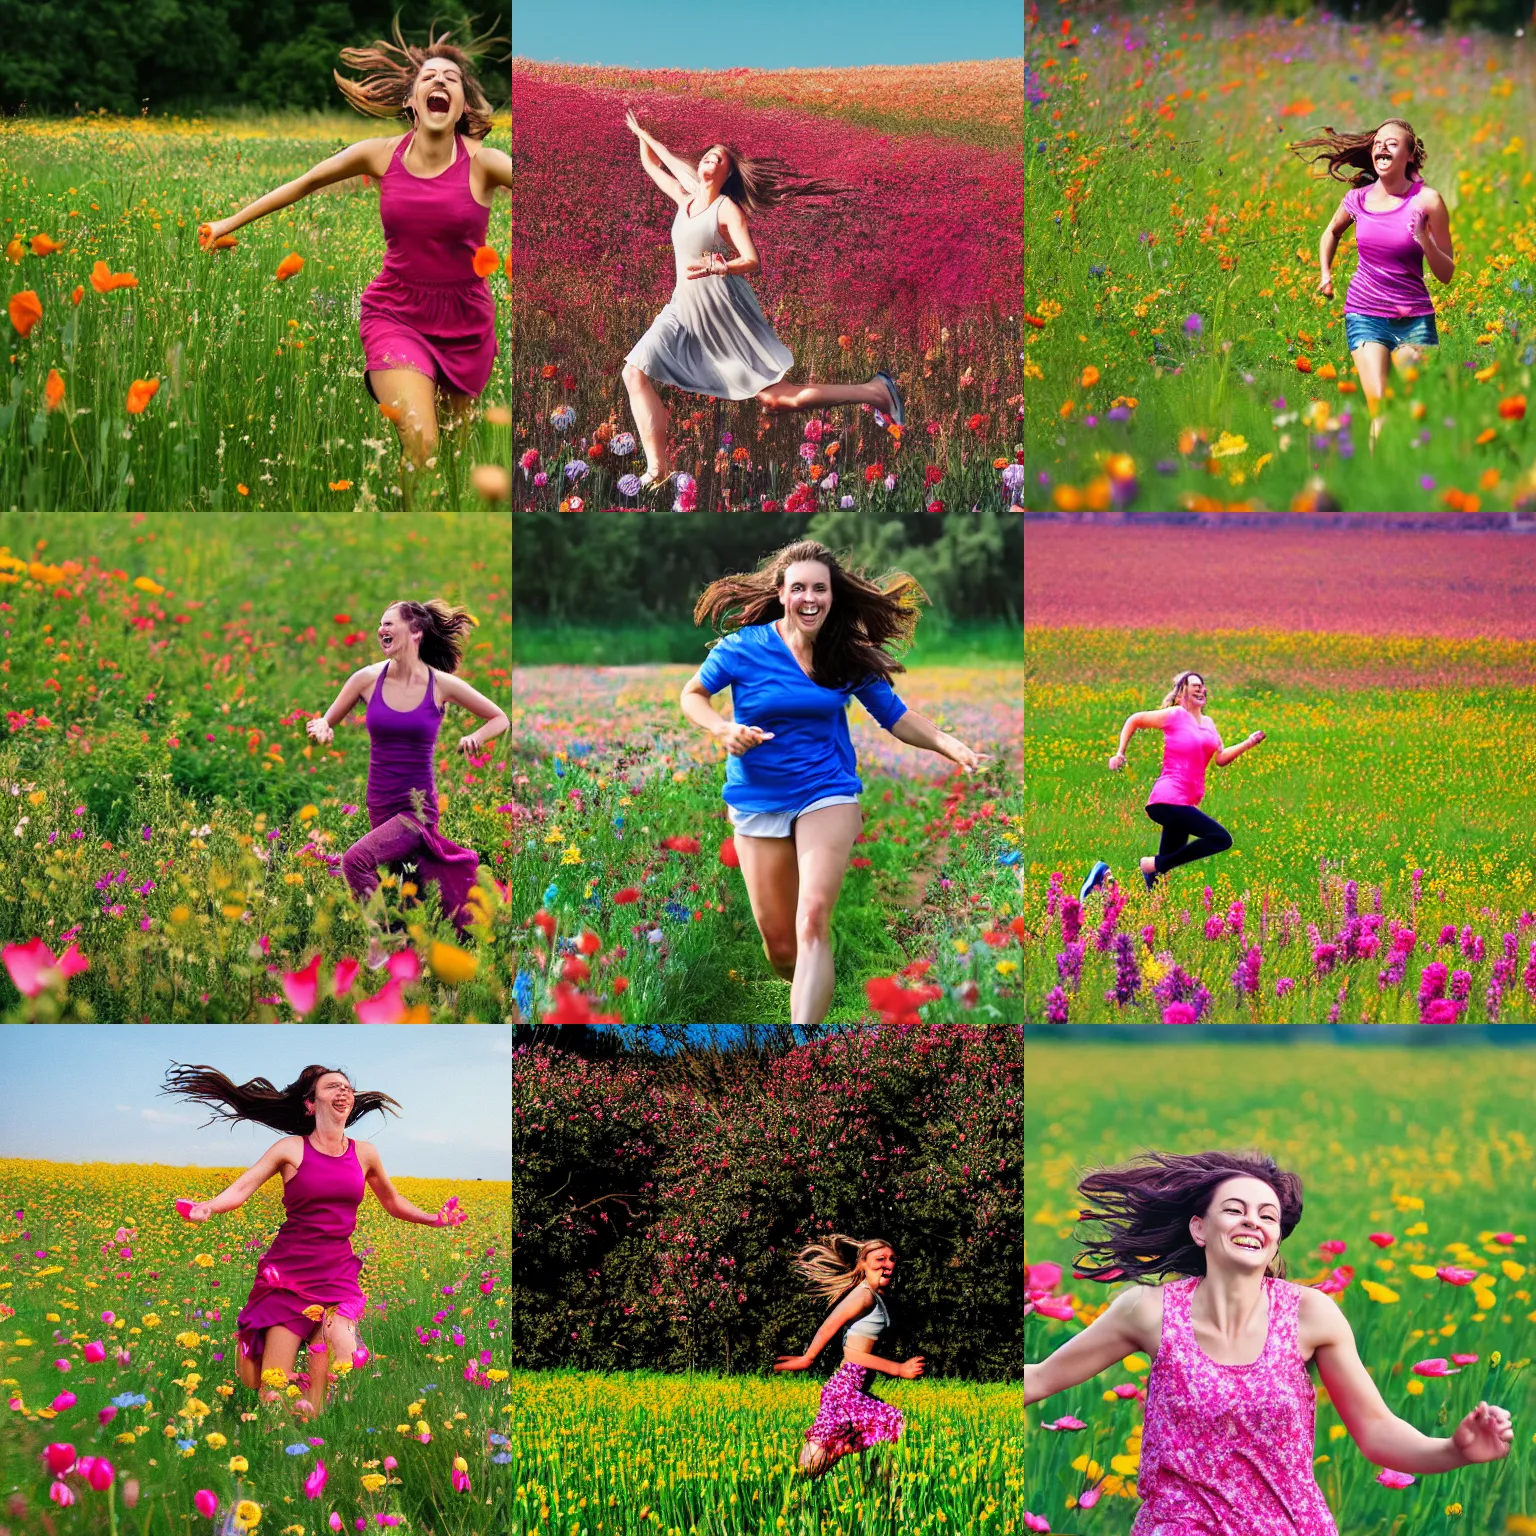 Prompt: an ecstatic woman running through a field of flowers